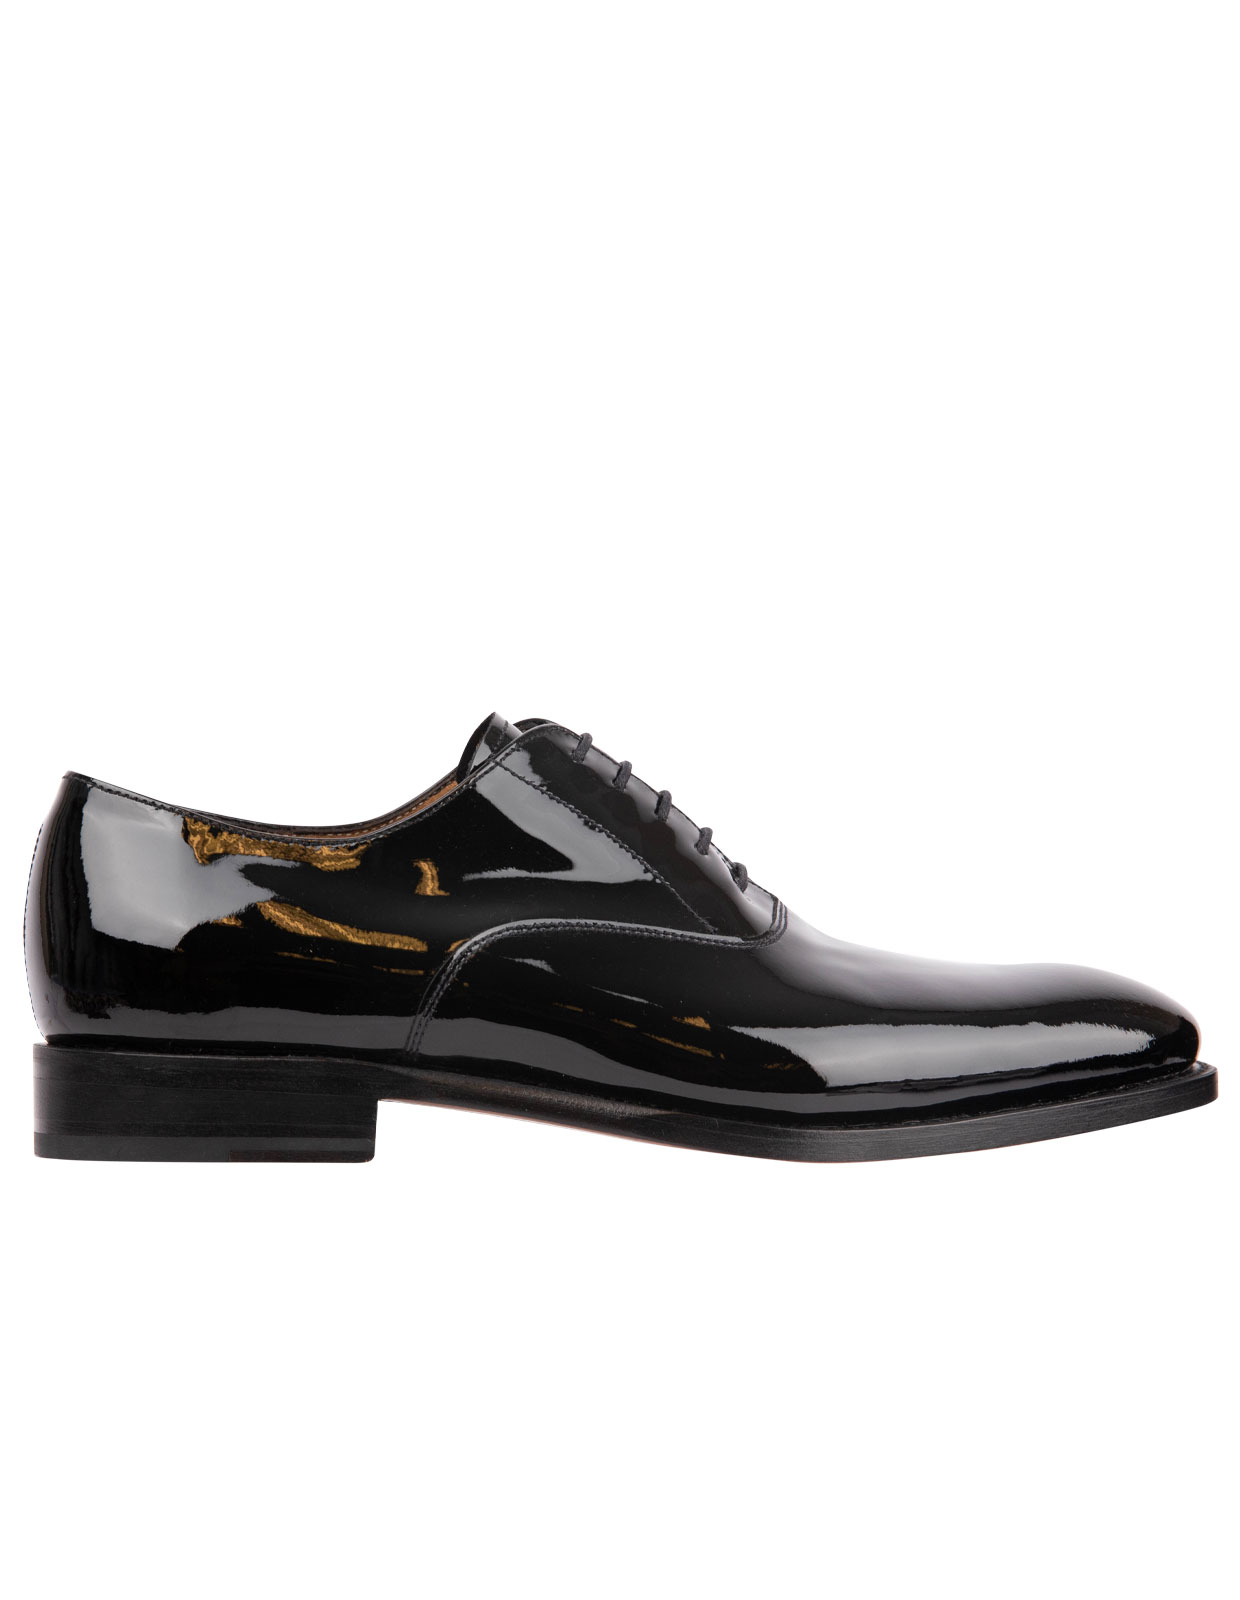 Patent Leather Oxford Shoe Black Stl 8.5